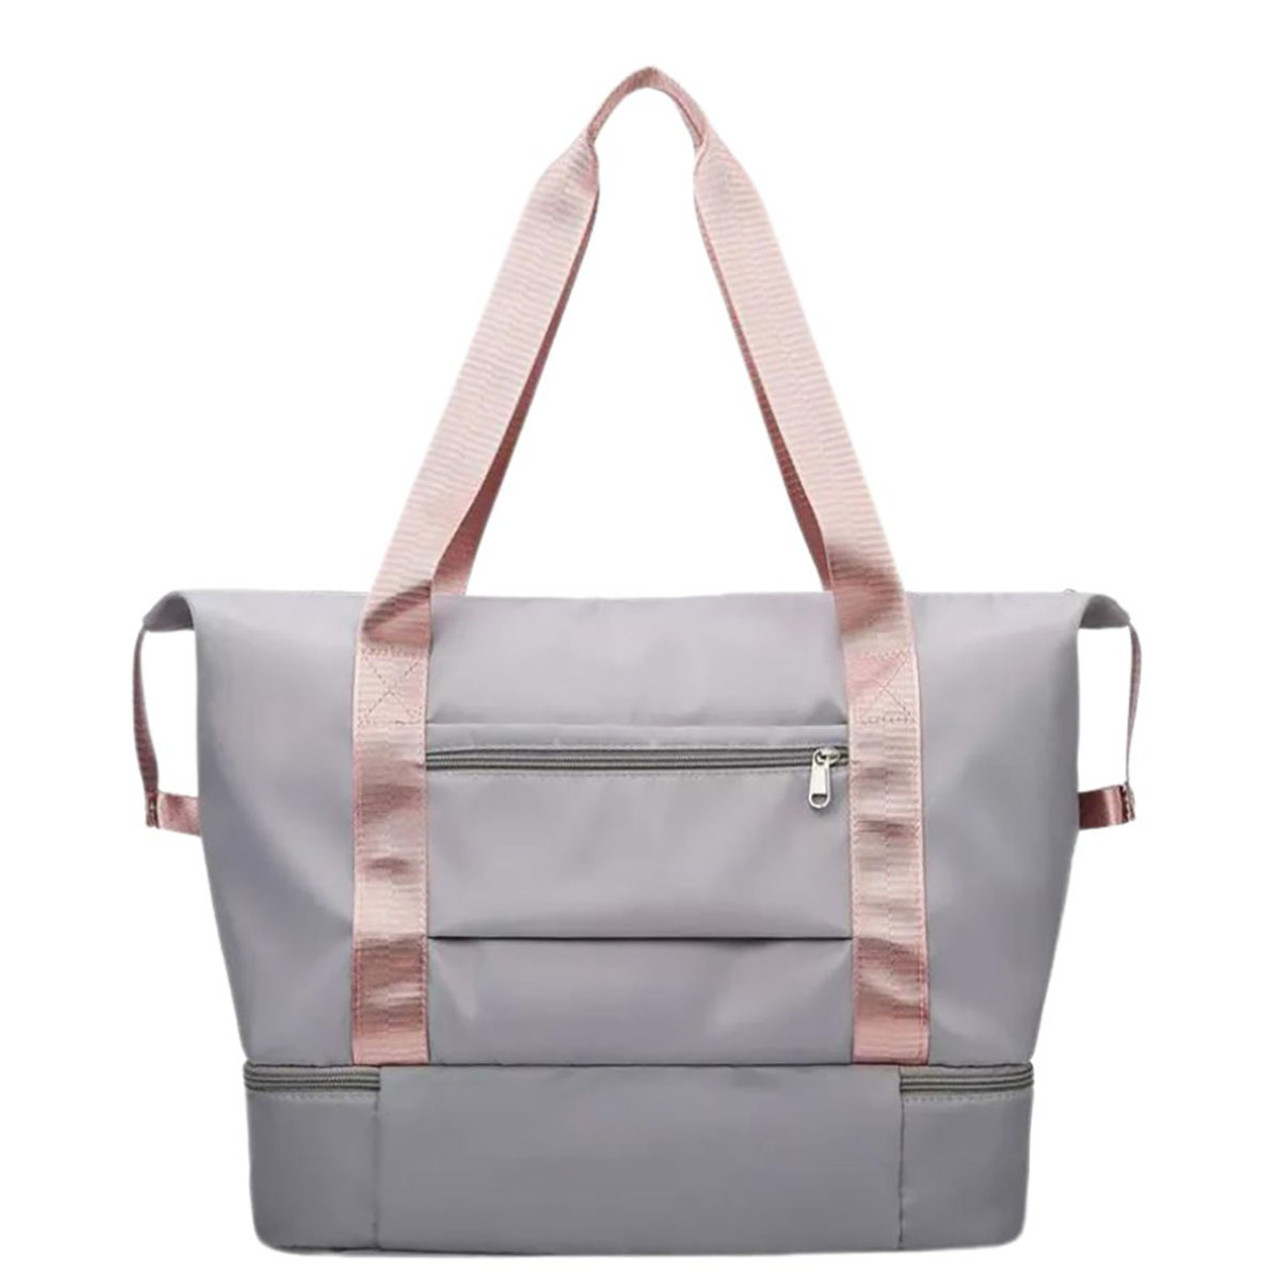 Tessa Travel Duffle Bag product image